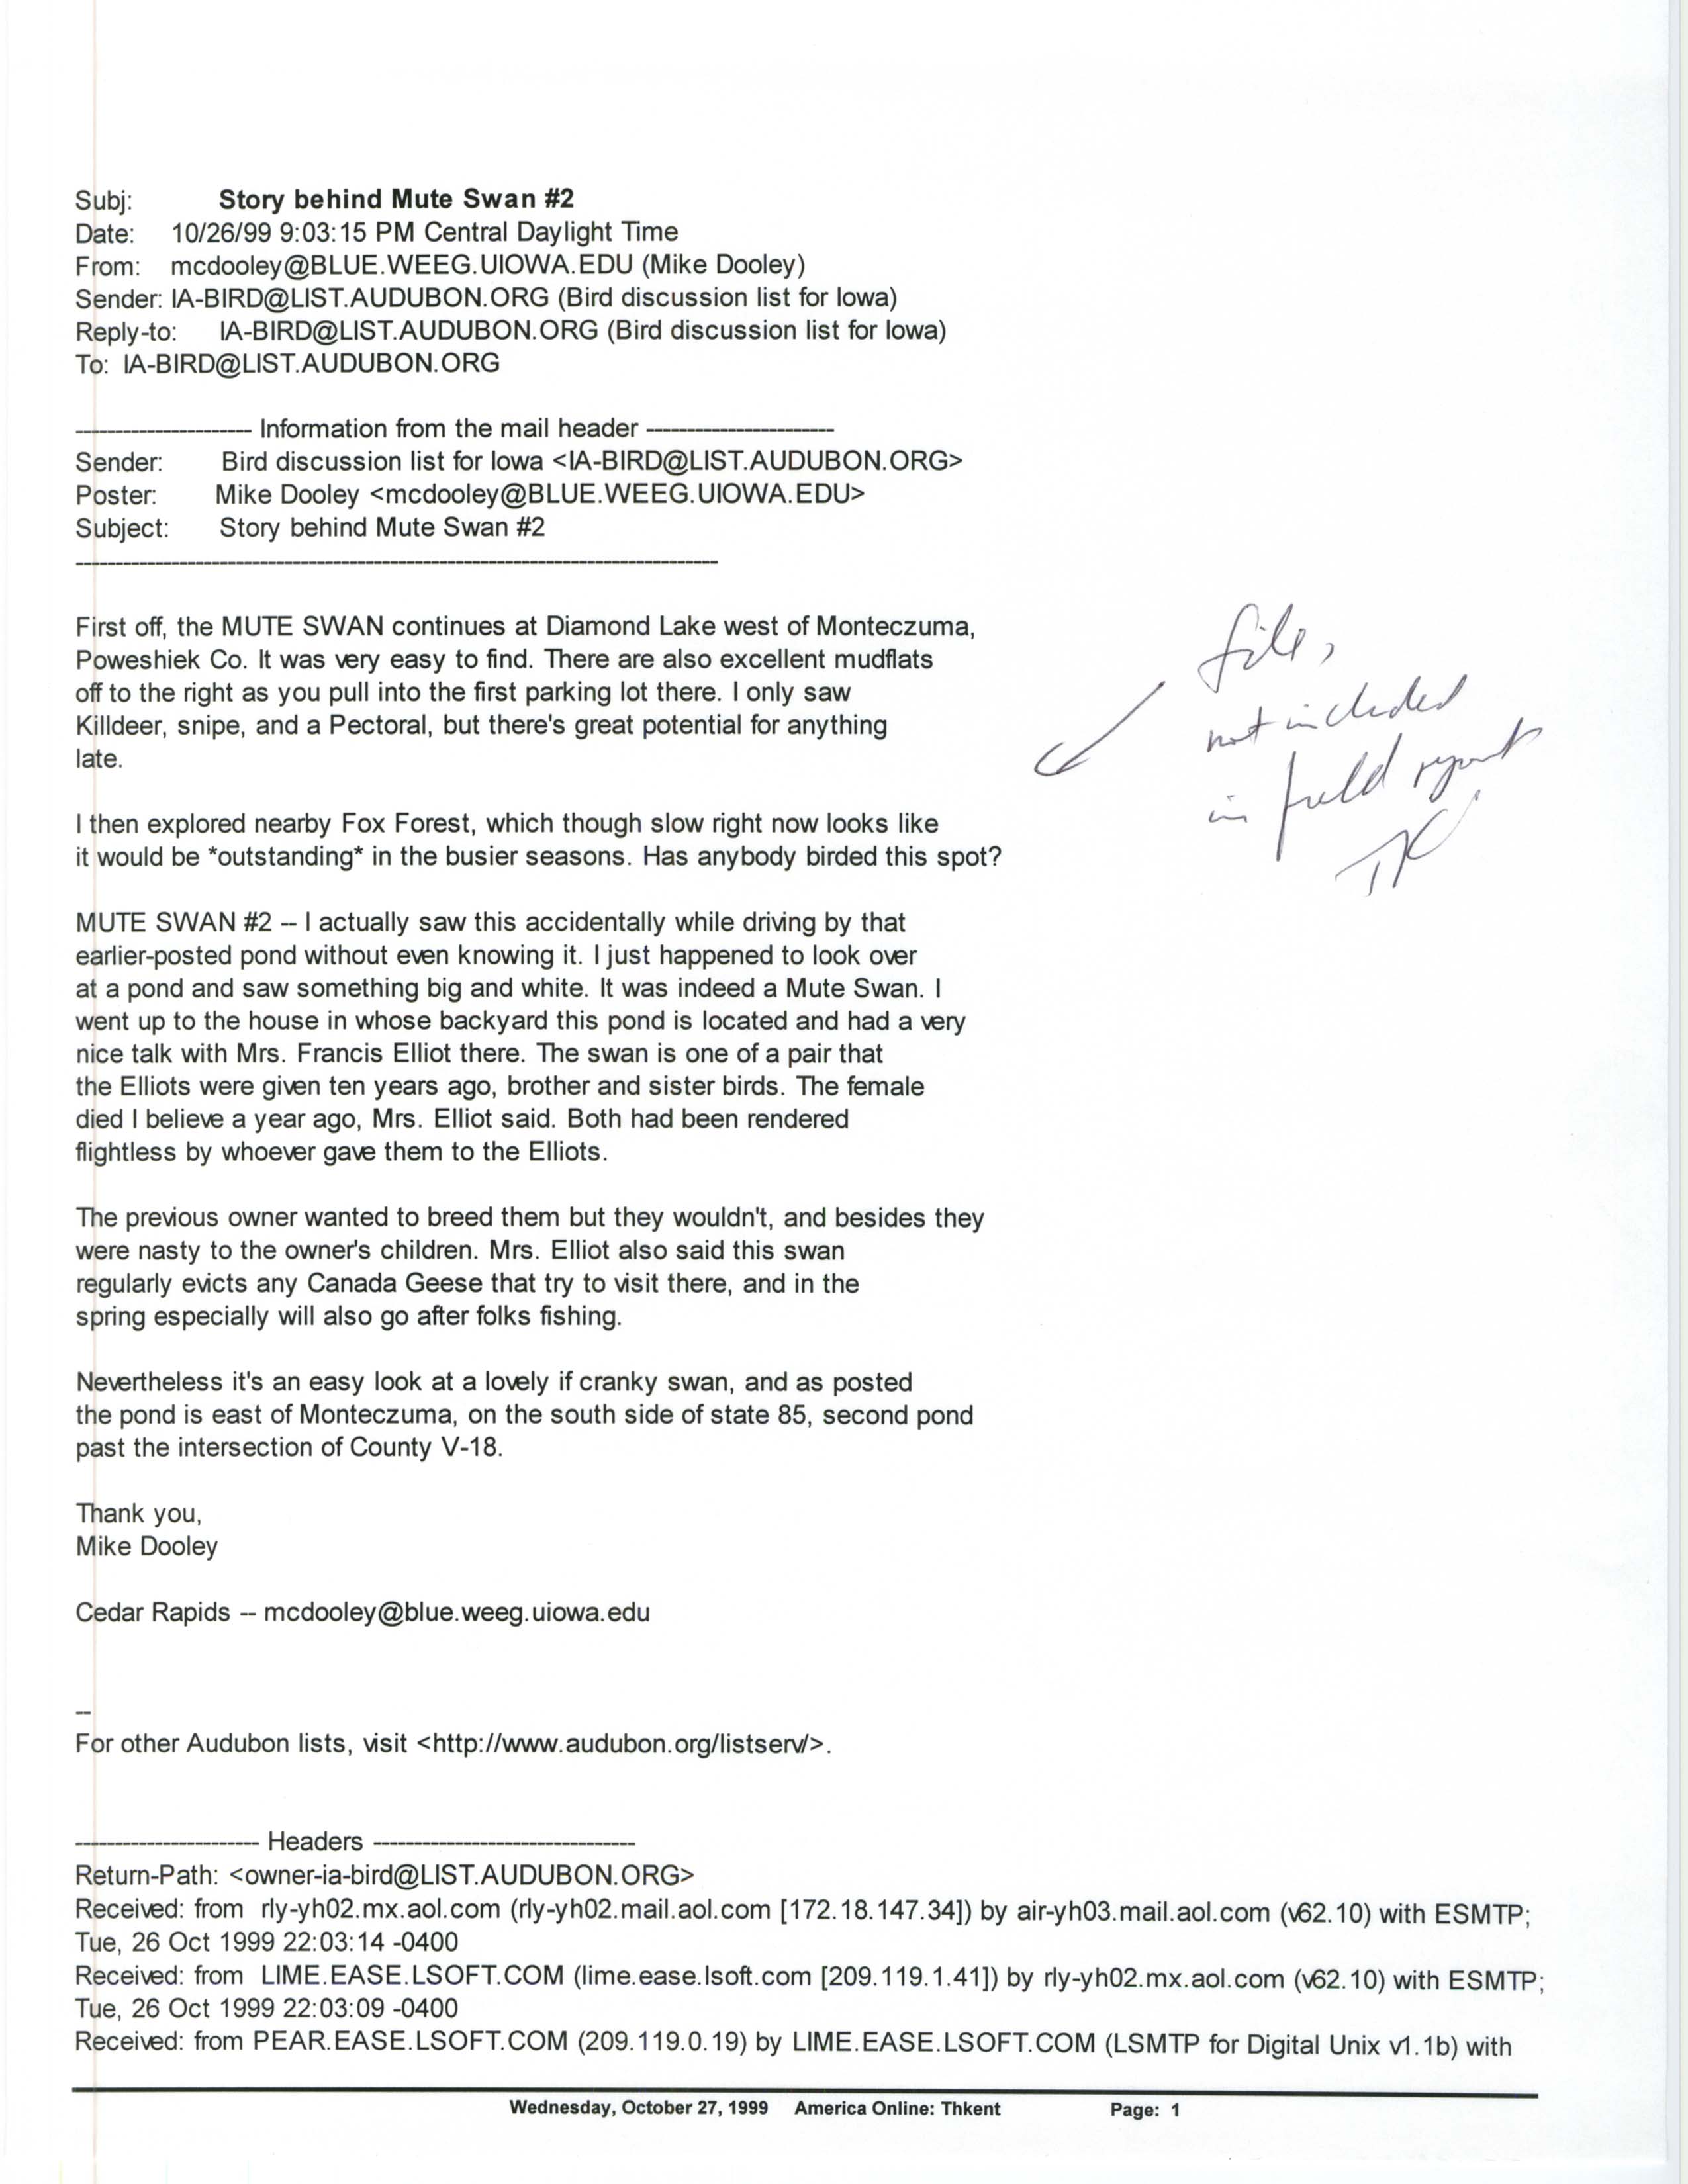 Mike Dooley email to Iowa Bird List regarding sightings of a Mute Swan, 1999